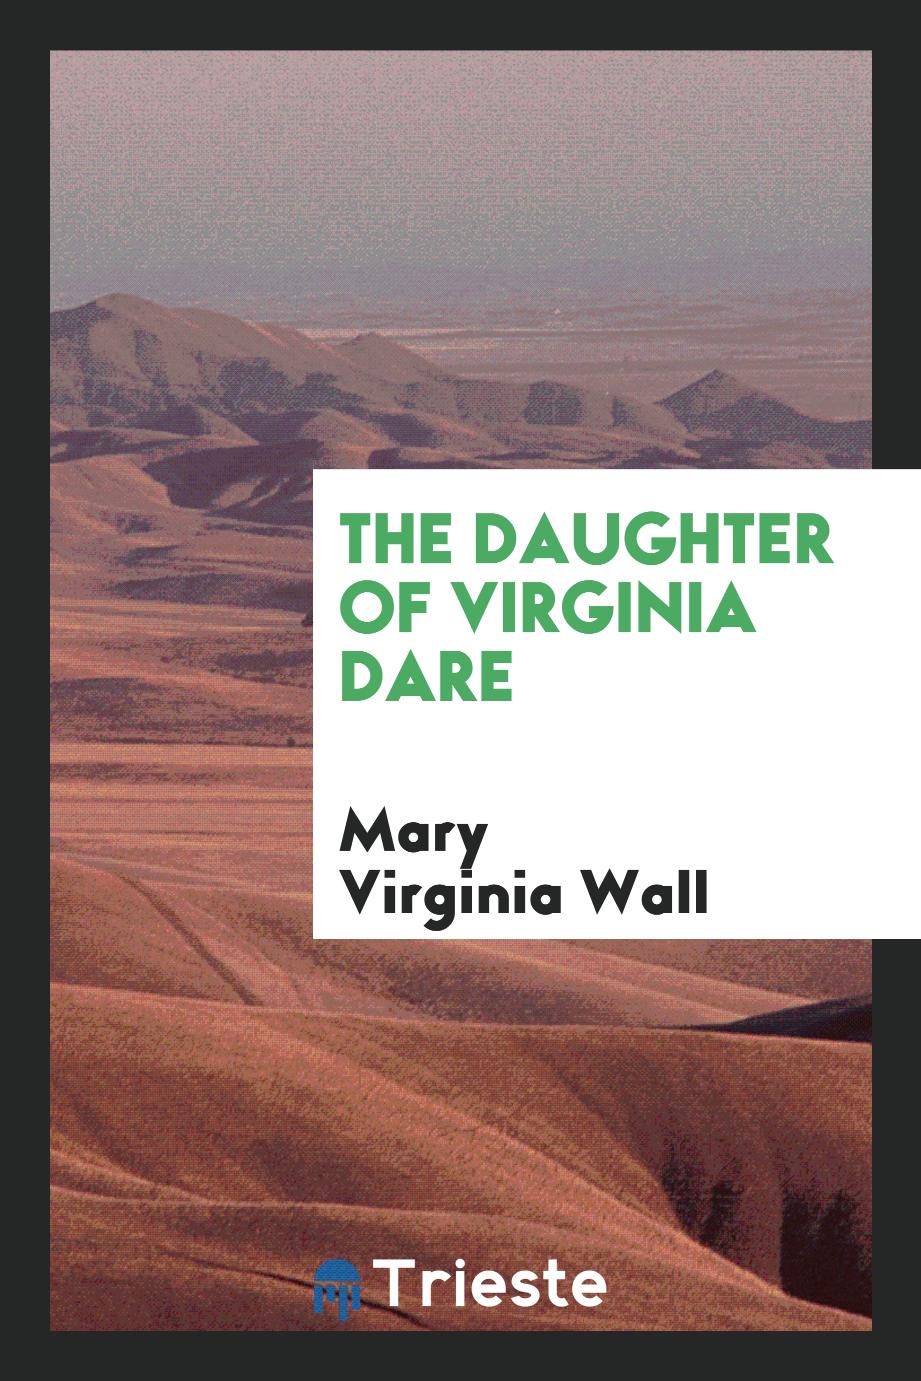 The daughter of Virginia Dare